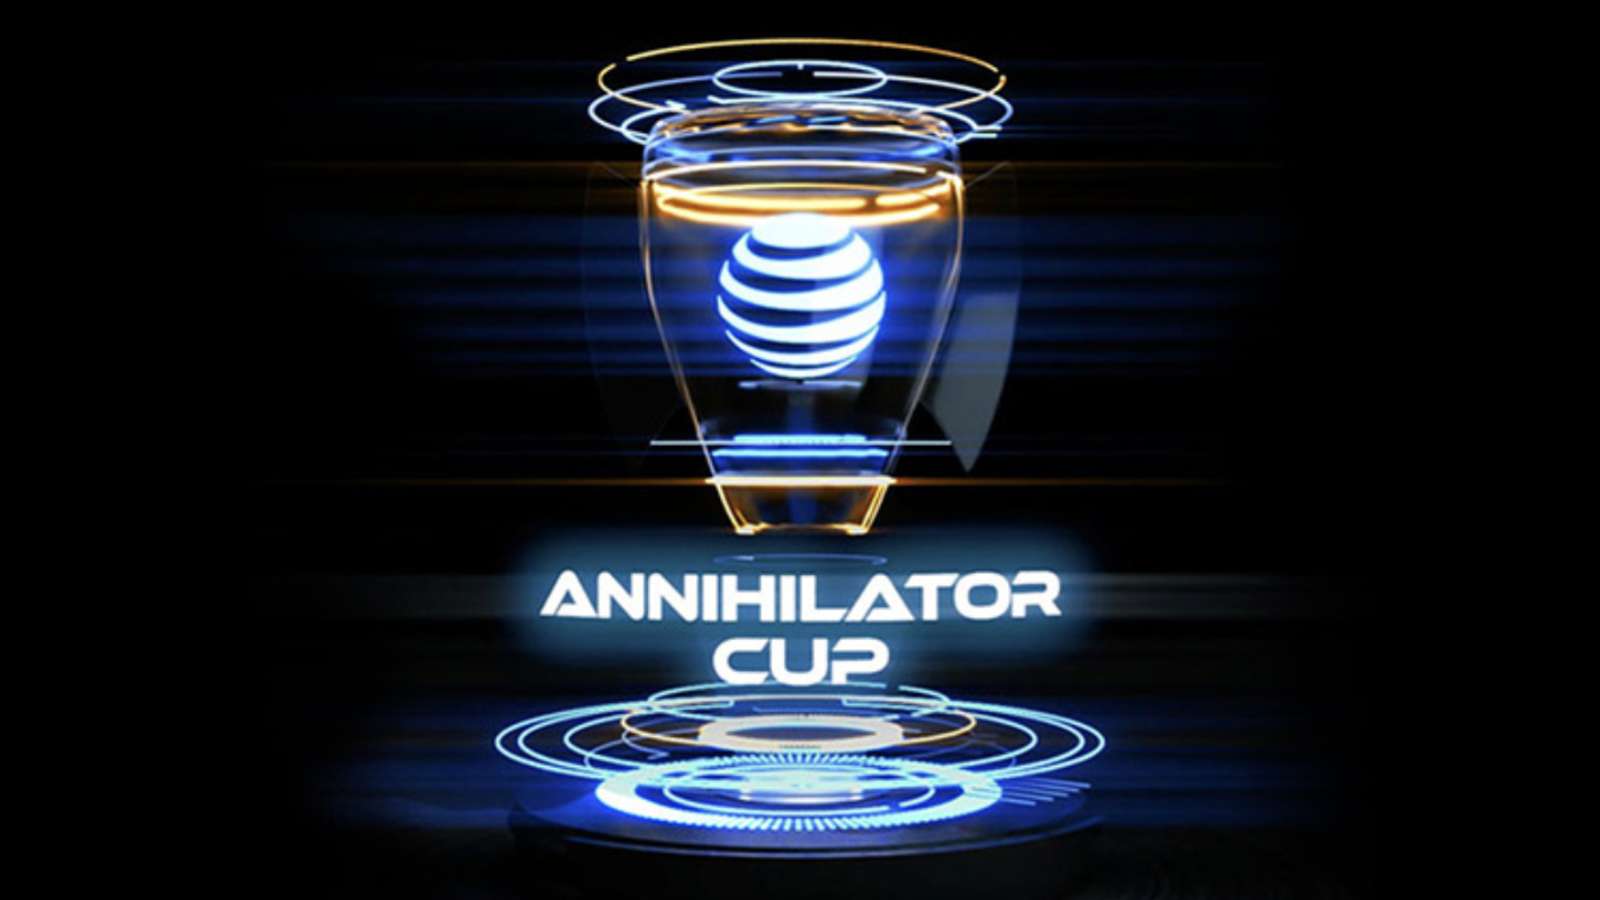 AT&T Annihilator Cup logo